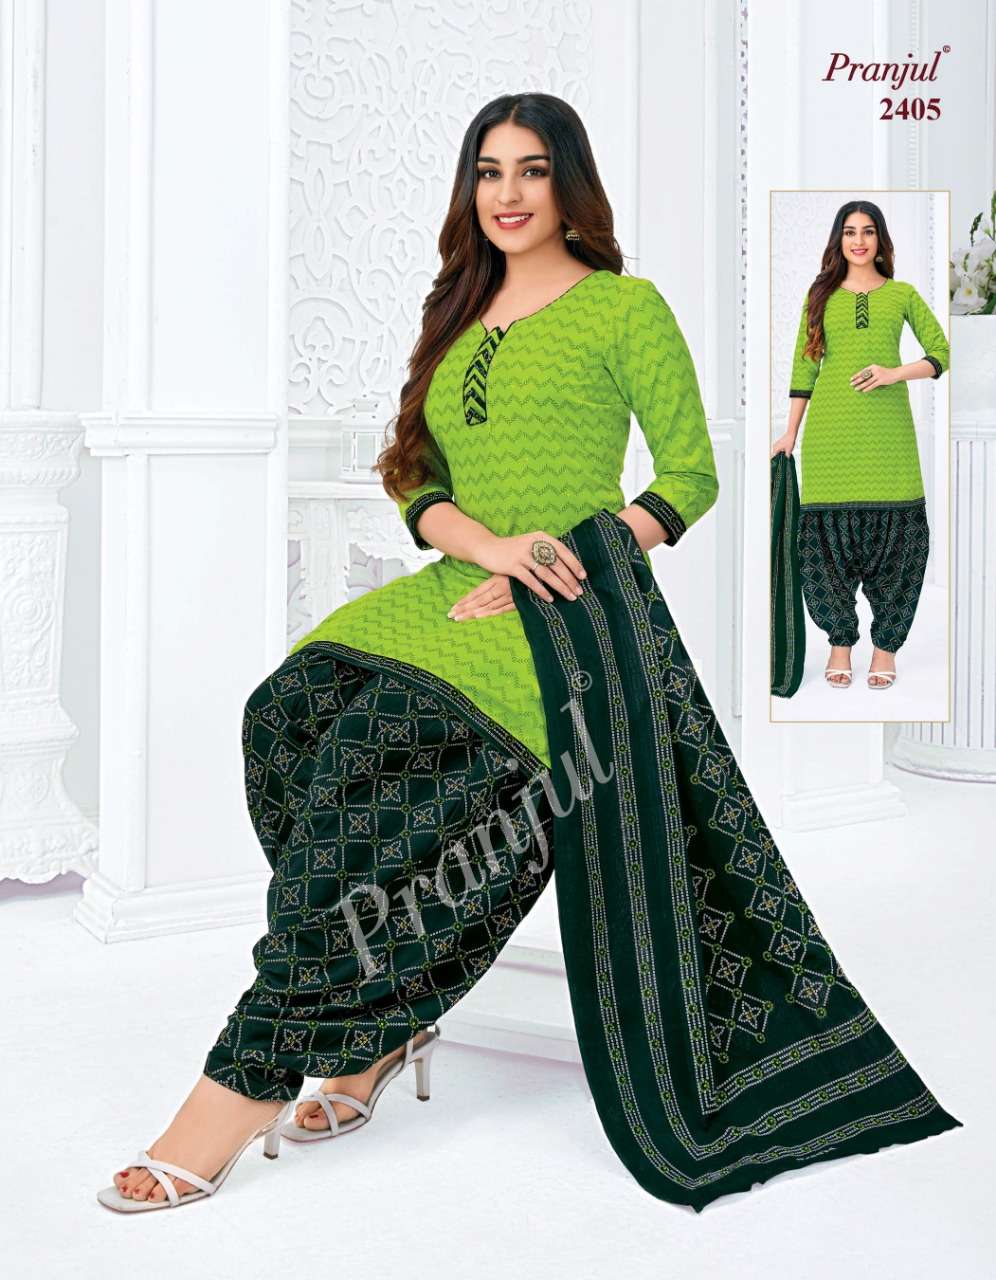 Pranjul Priyanshi Vol 24 By Pranjul Fashion Cotton Wholesalers Supplier Dealer Lowest Price Readymade Salwar Suit Set